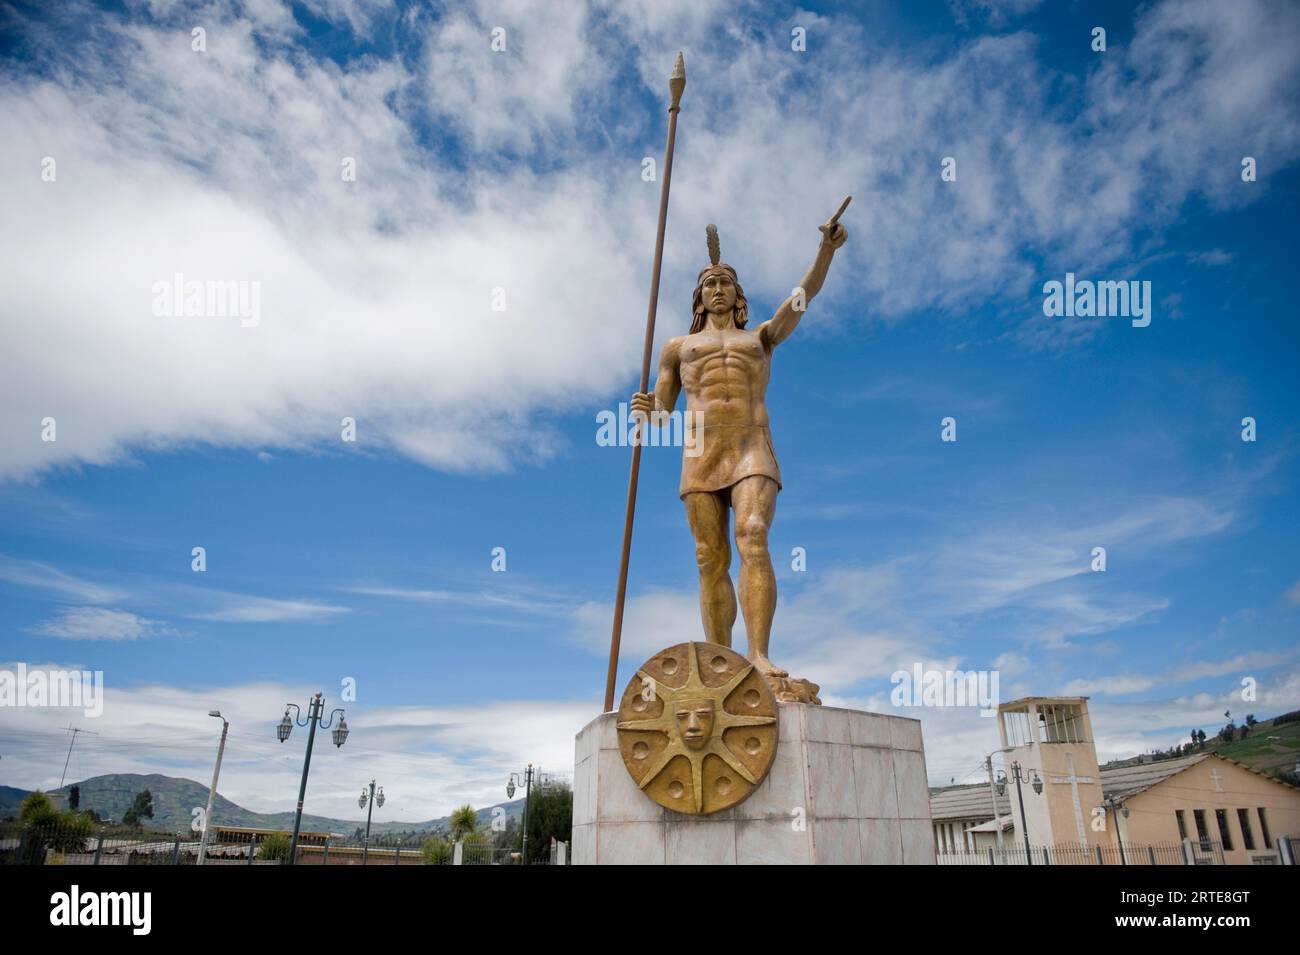 Estatua de un guerrero con lanza en el camino de Quito a Limón; Ecuador Foto de stock